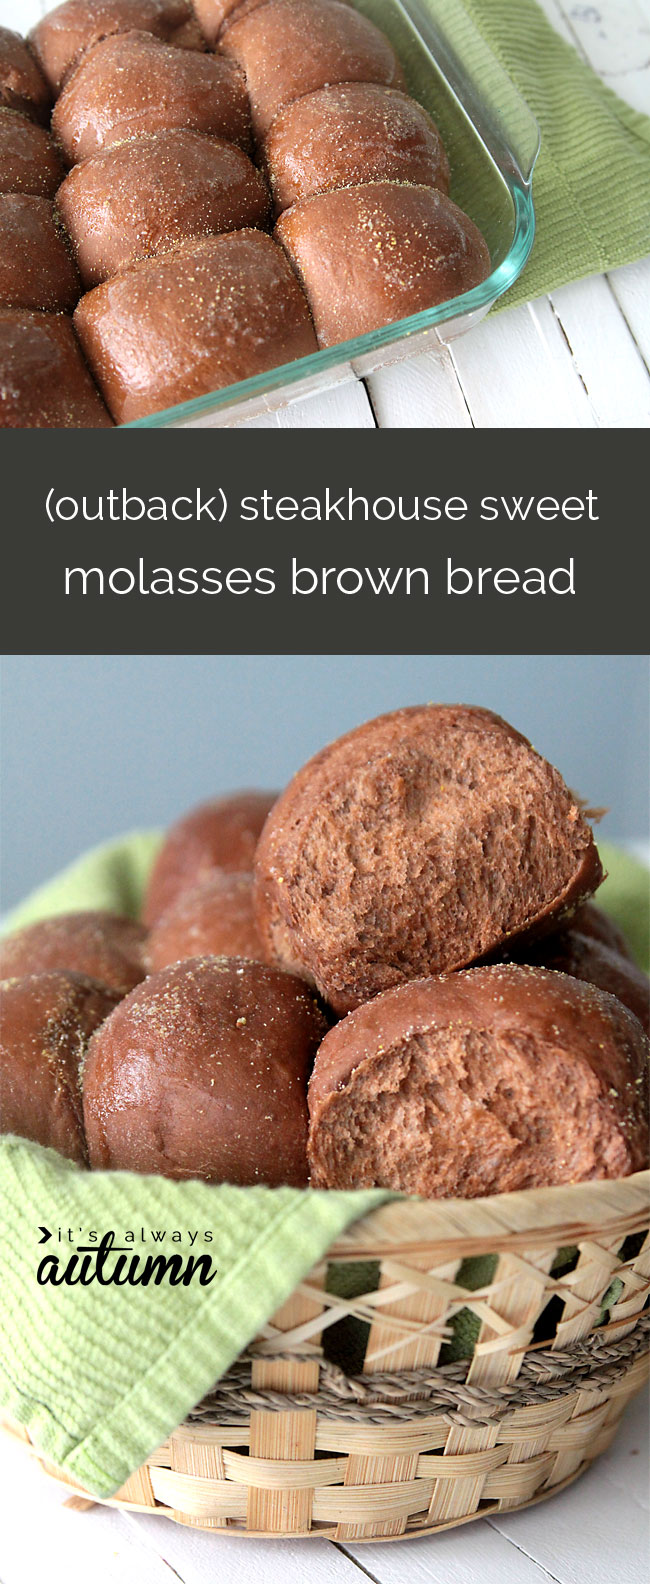 Brown-bread-sweet-molasses-steakhouse-outback-copycat-recipe-dinner-rolls